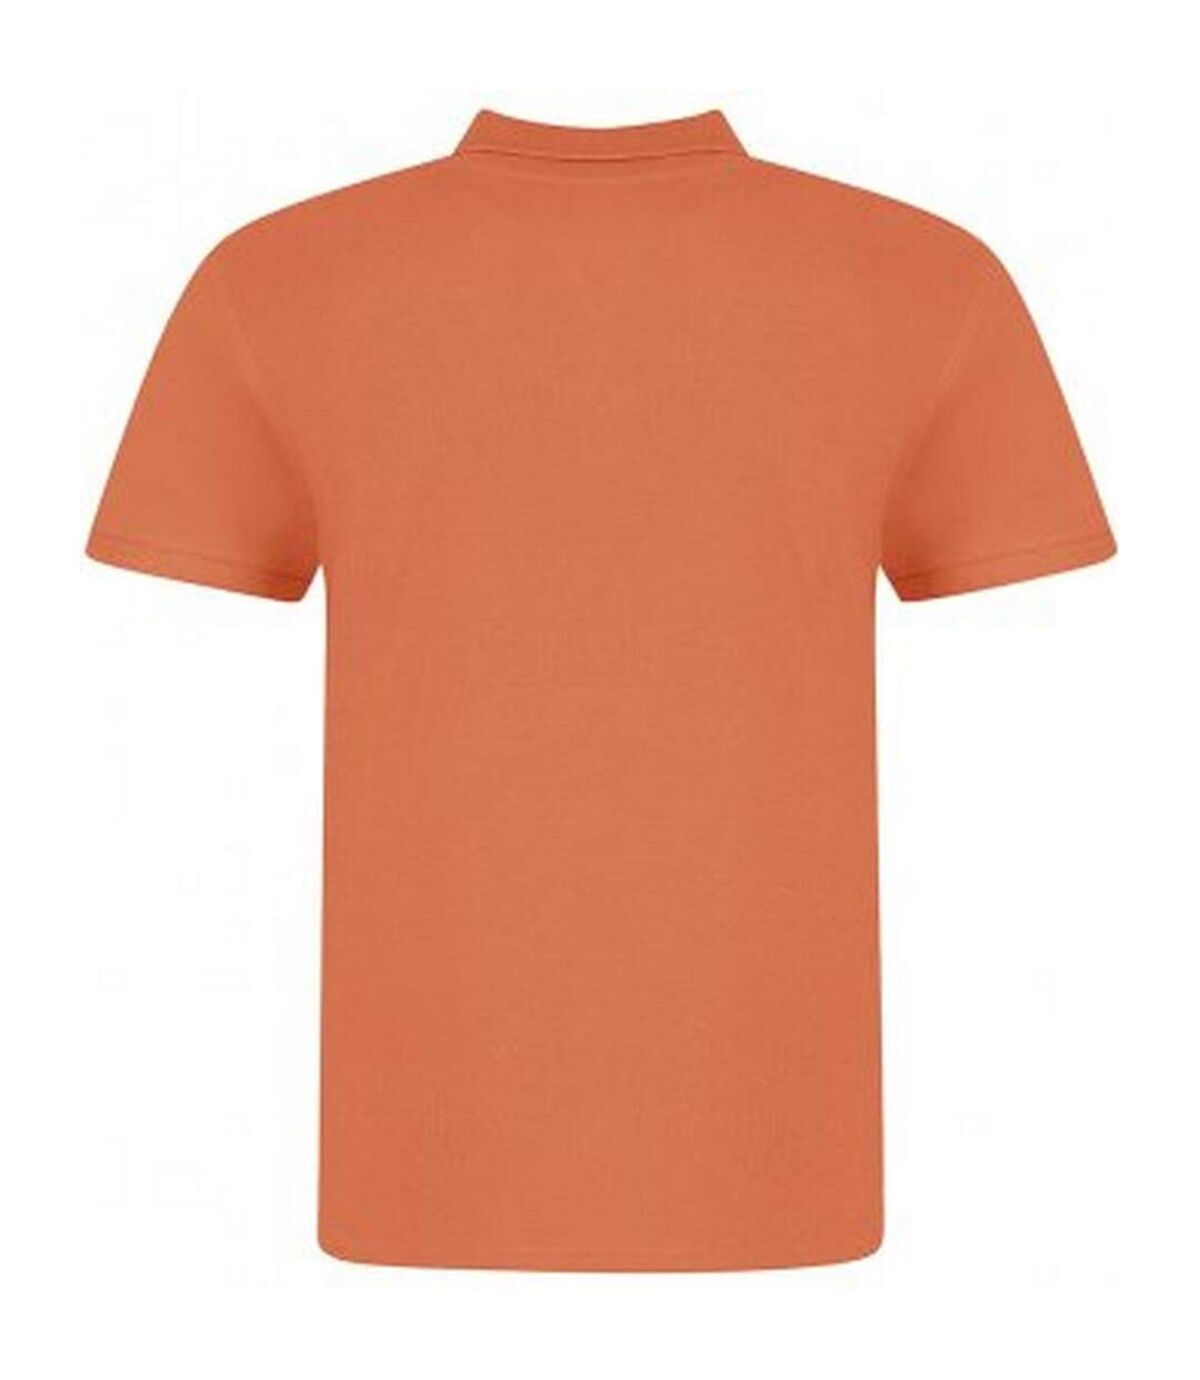 Awdis Mens Piqu Cotton Short-Sleeved Polo Shirt (Mango Orange) - UTPC4134